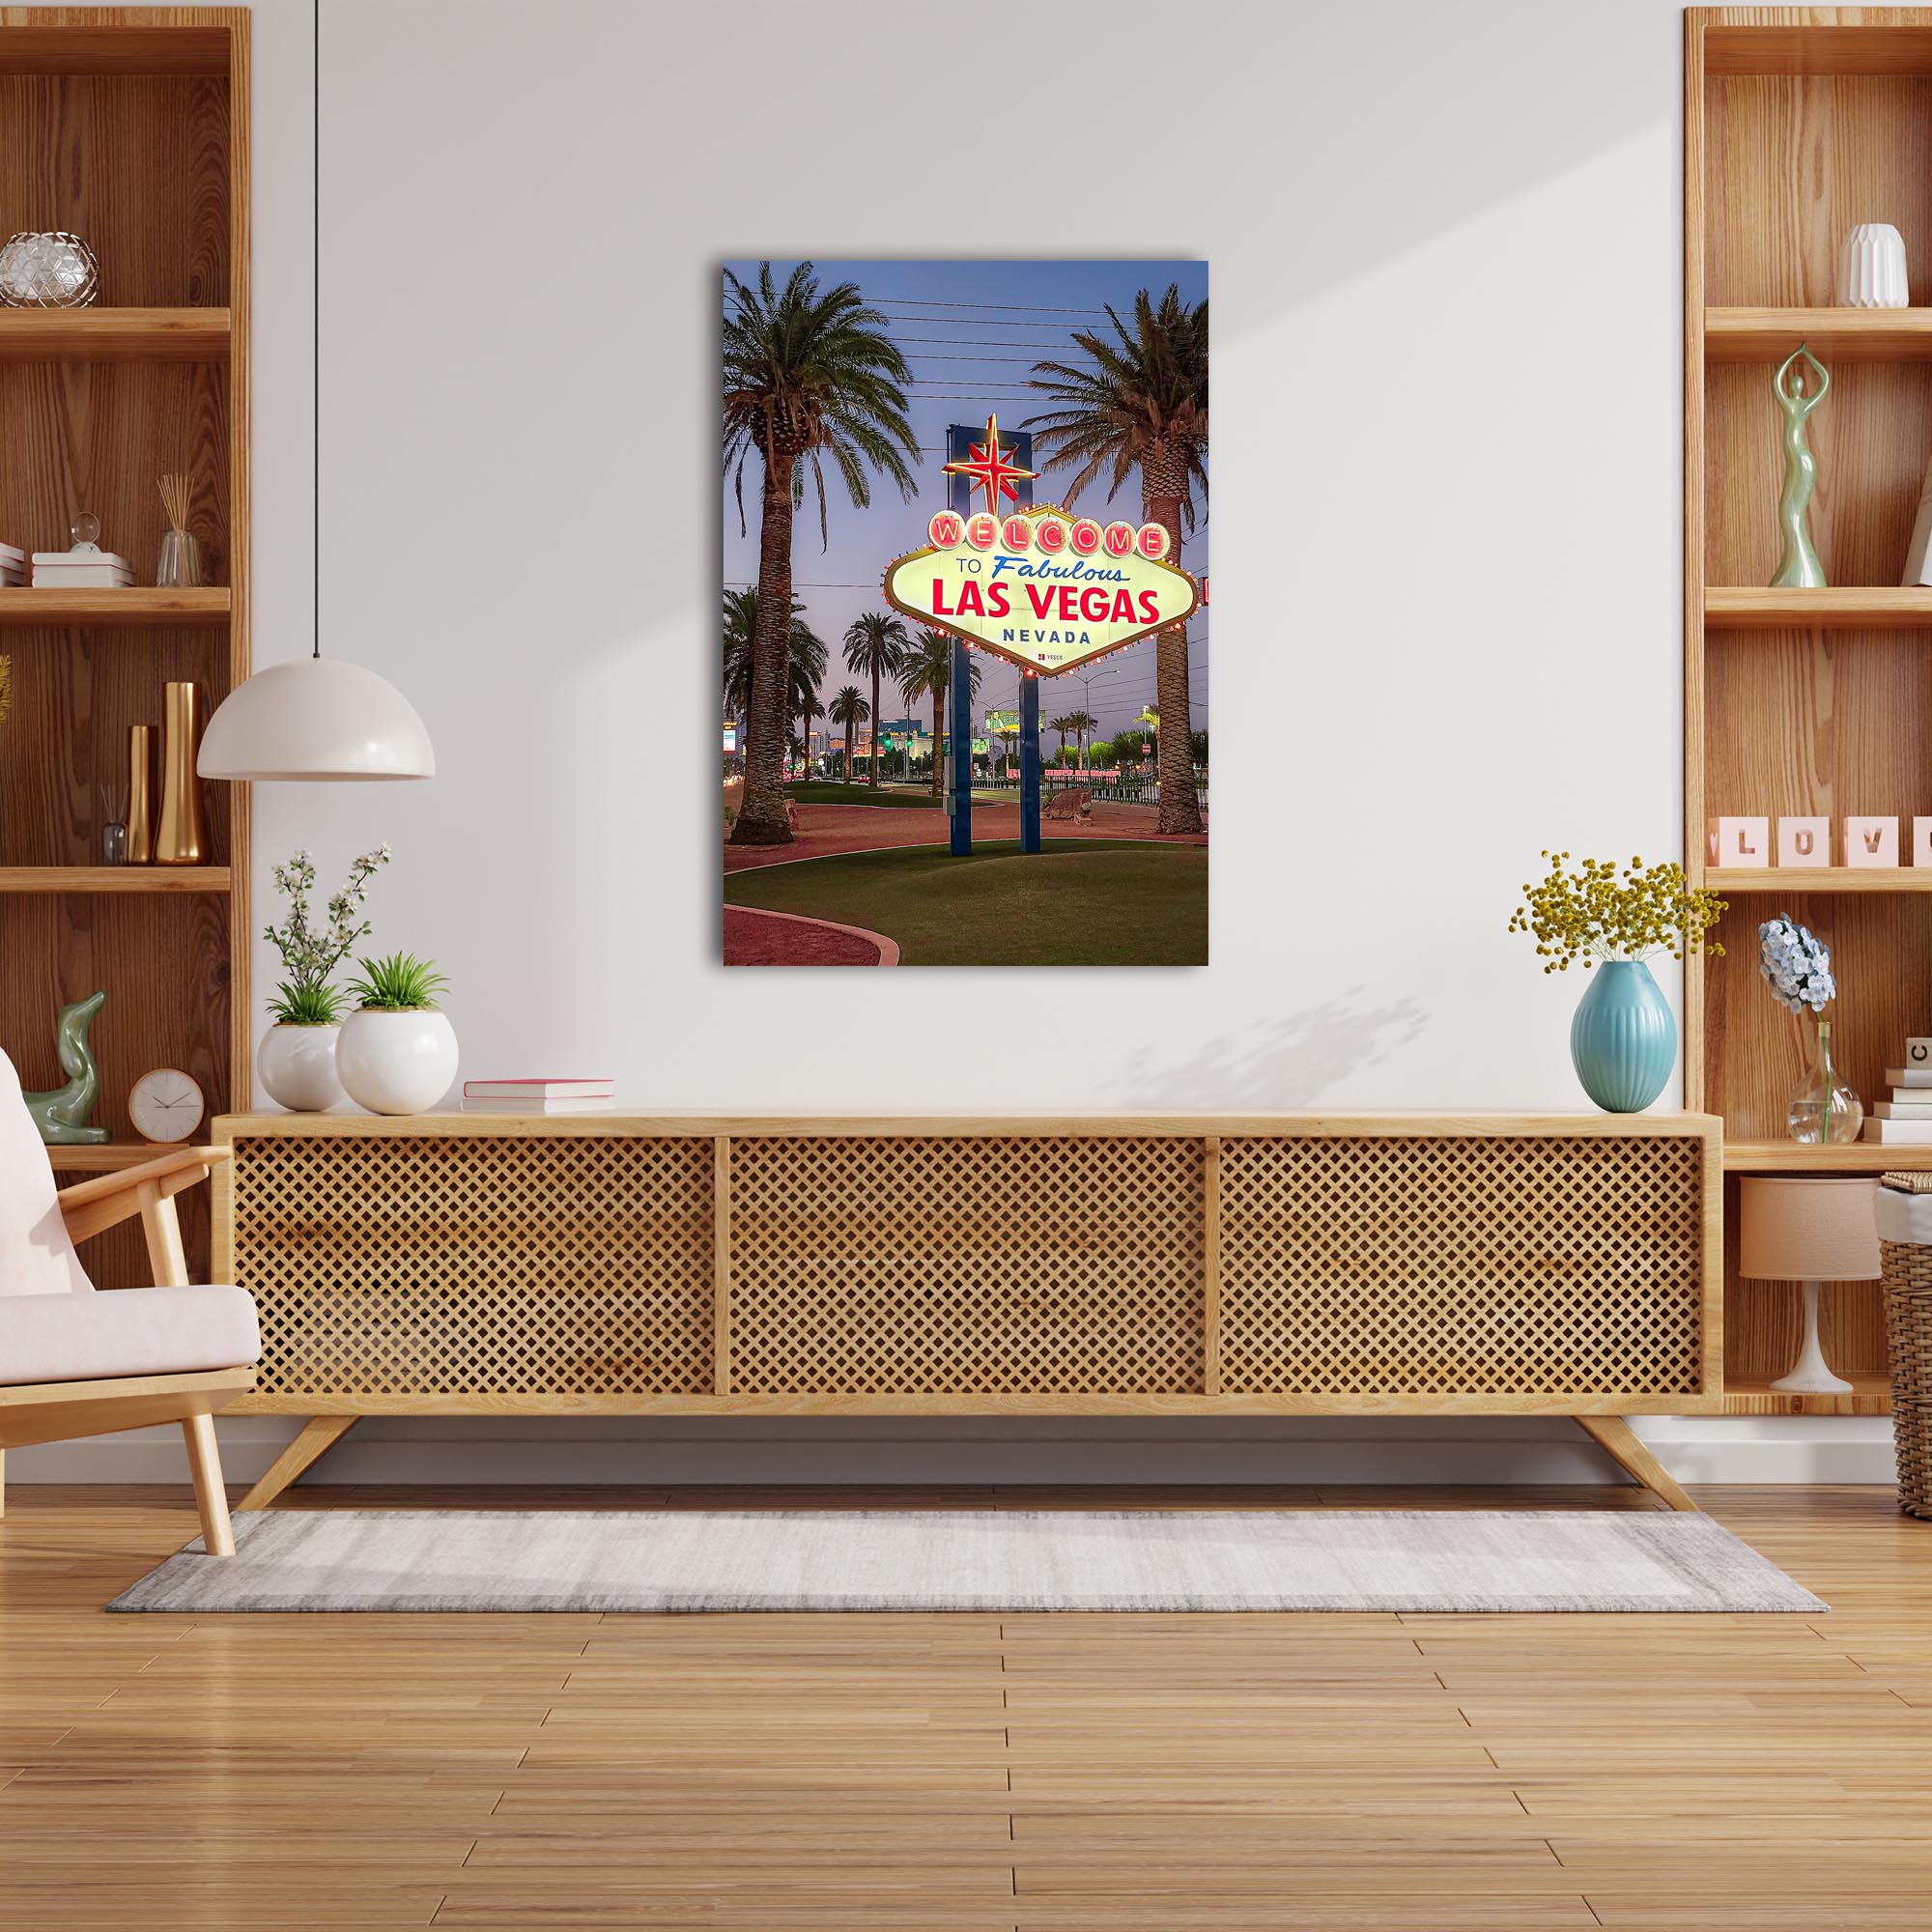 Fabulous Las Vegas by Adam Utz - Las Vegas Prints, Man Cave Decor (22in x 32in) - Lifestyle View